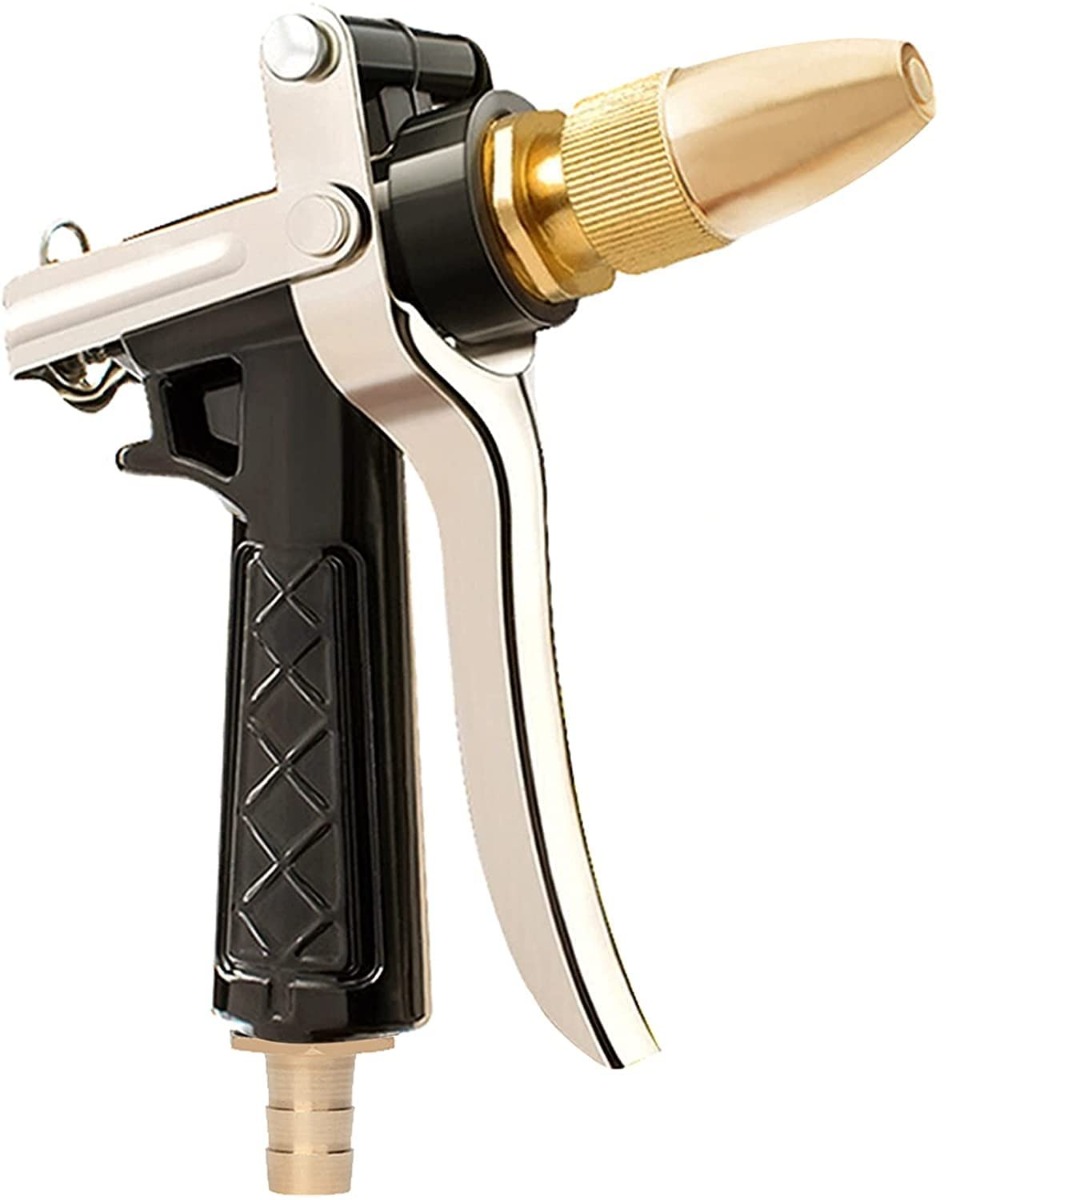 Allextreme High Pressure Water Sprayer Hose Nozzle Heavy Duty, Lawn Garden  Spray Front Trigger with Connector (Black) (HBS-003)